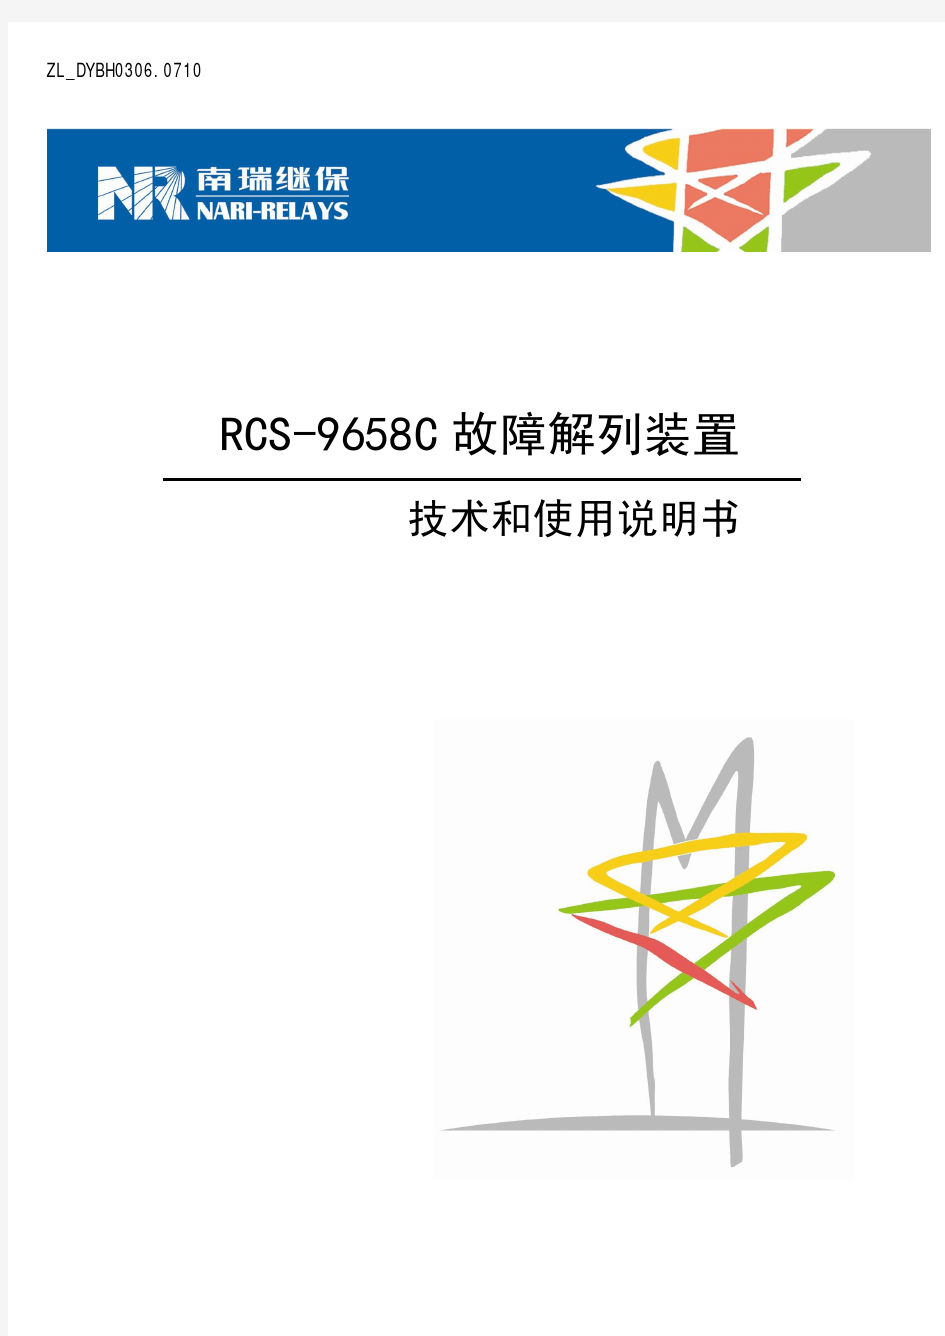 RCS-9658C 故障解列装置技术和使用说明书